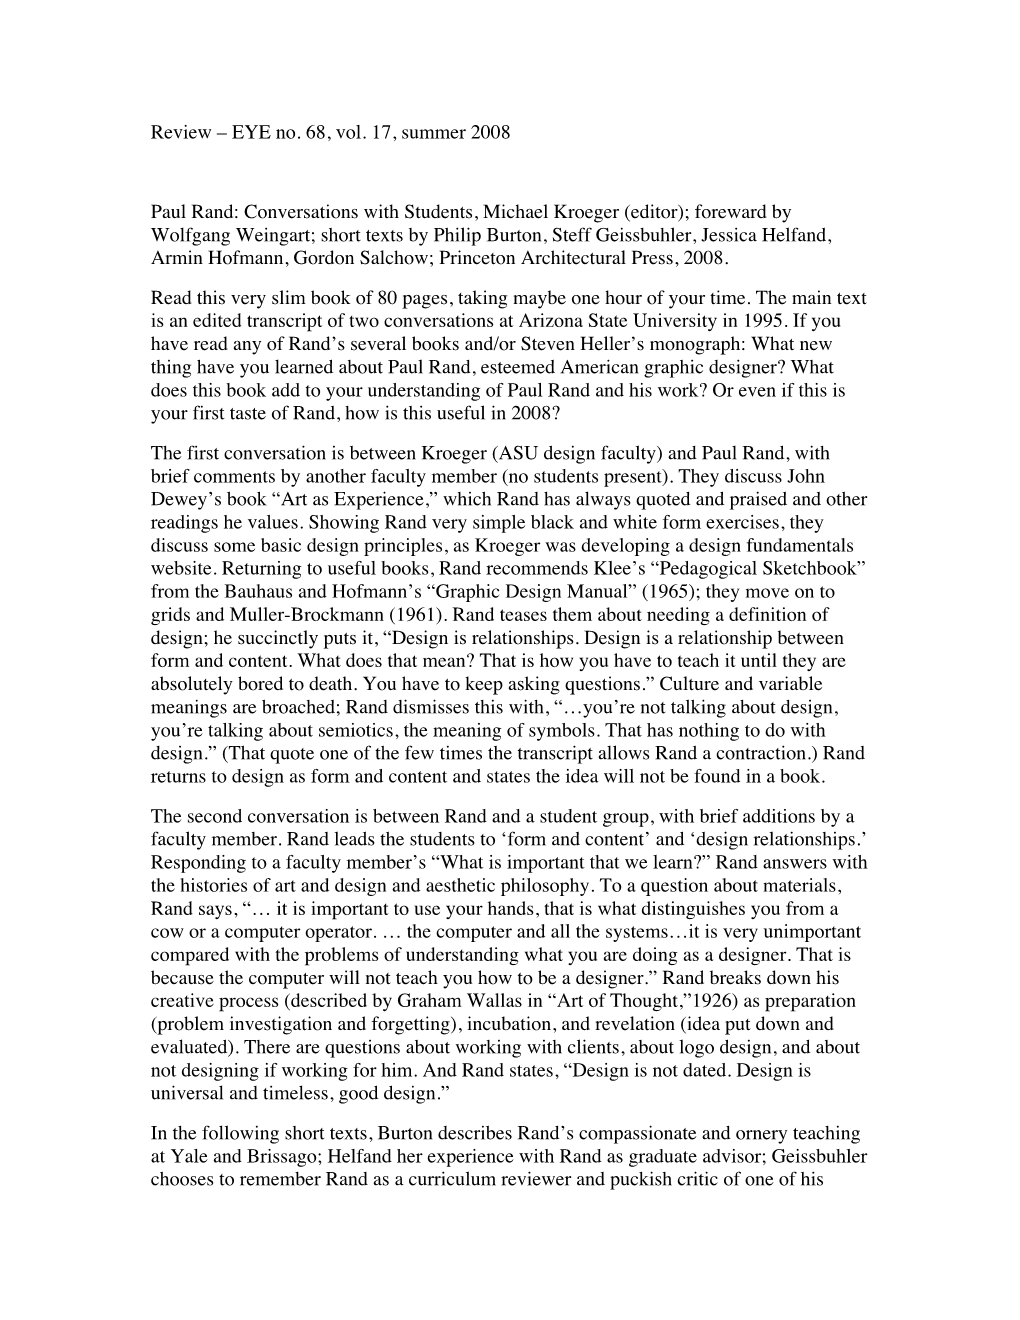 Review – EYE No. 68, Vol. 17, Summer 2008 Paul Rand